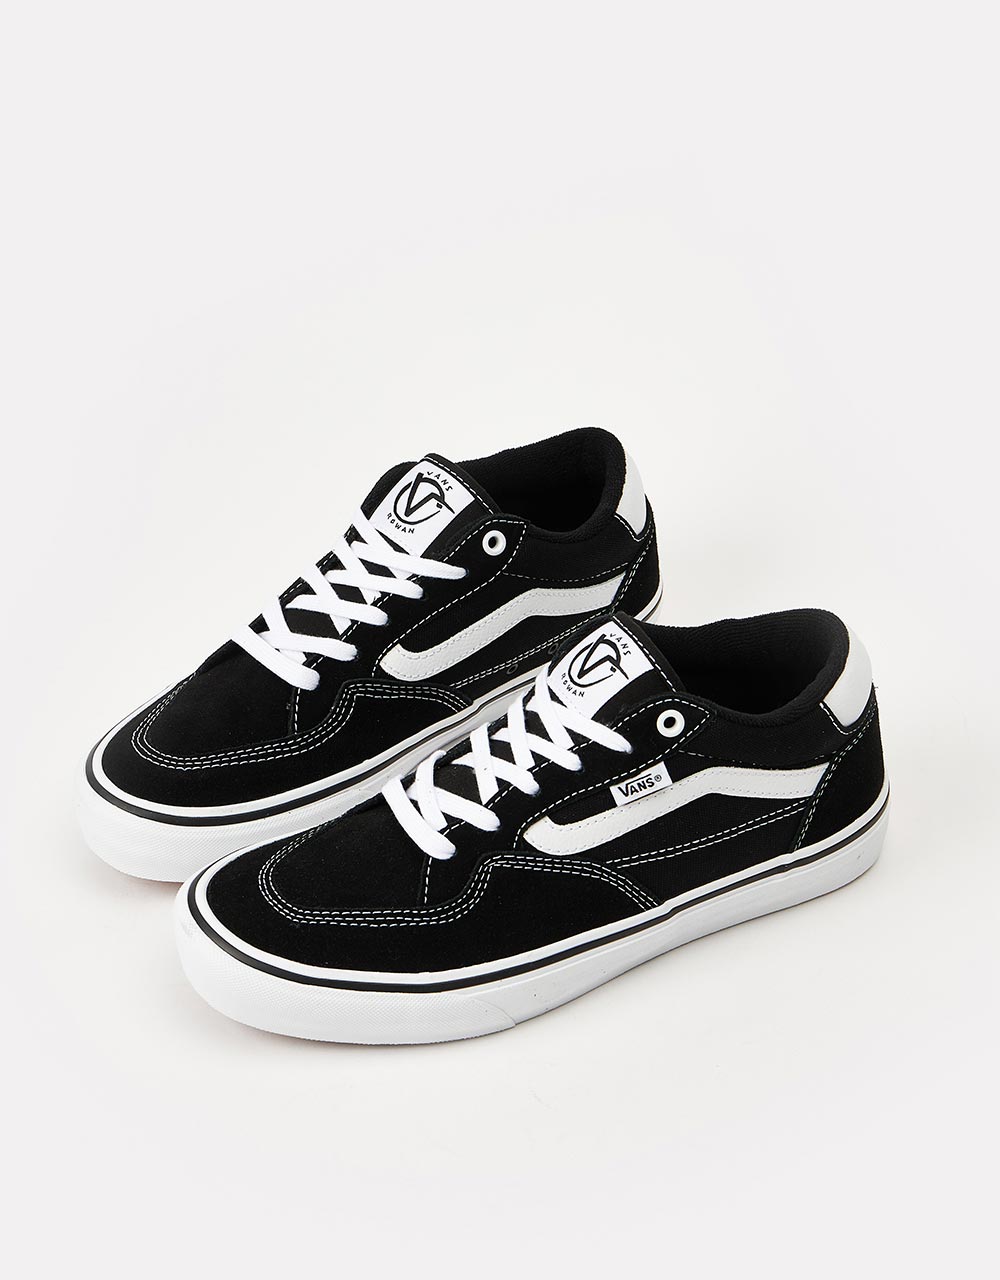 Vans Rowan Pro Skate Shoes - Black/White